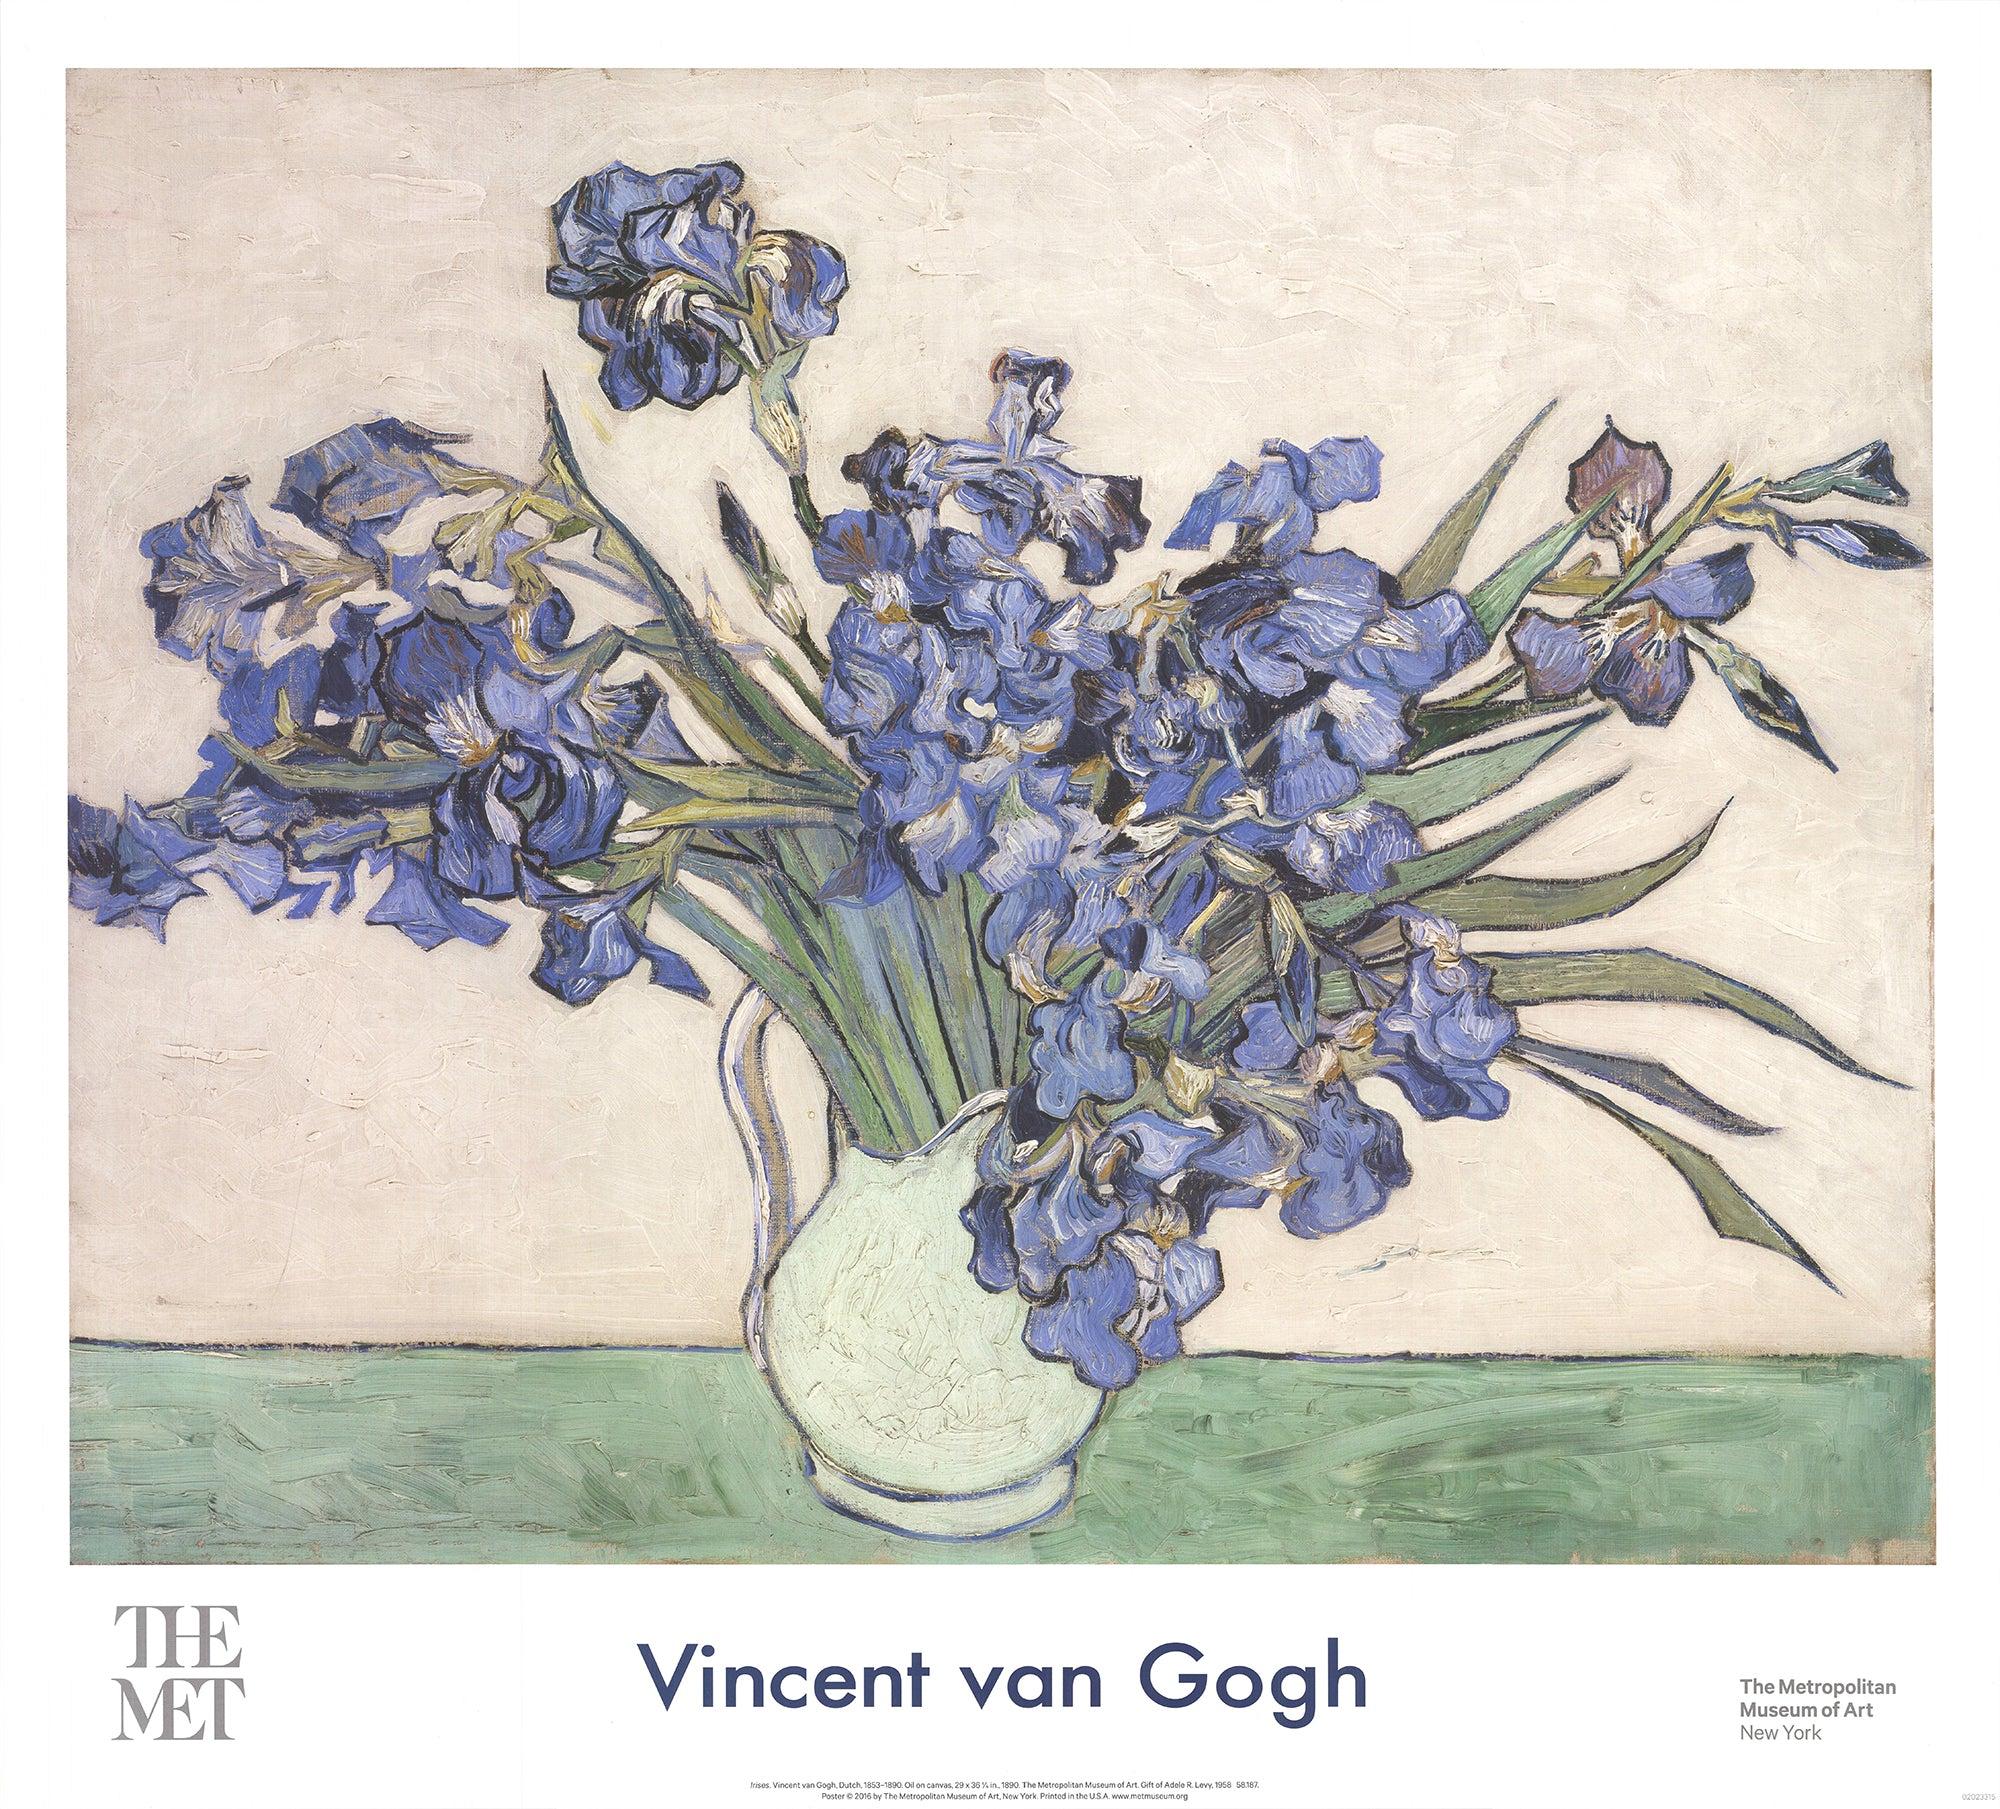 VINCENT VAN GOGH Irises in a Vase, 2016 - Print by Vincent van Gogh